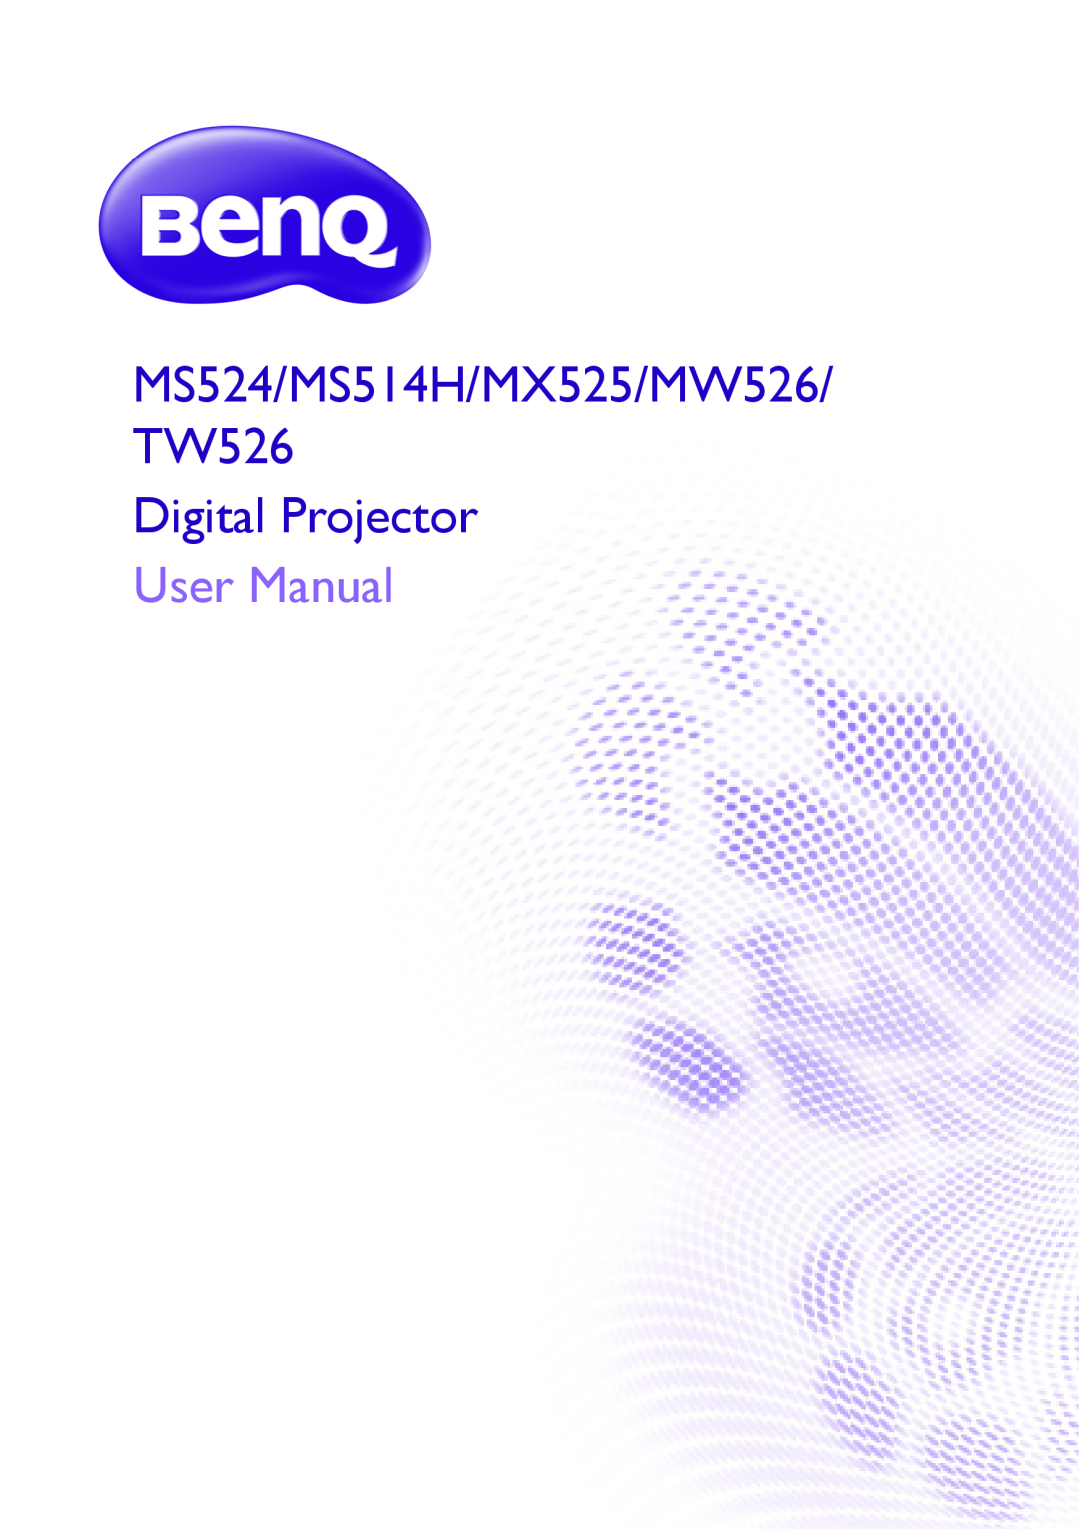 BenQ MS524/MS514H/MX525/MW526/TW526 user manual MS524/MS514H/MX525/MW526 TW526 Digital Projector 